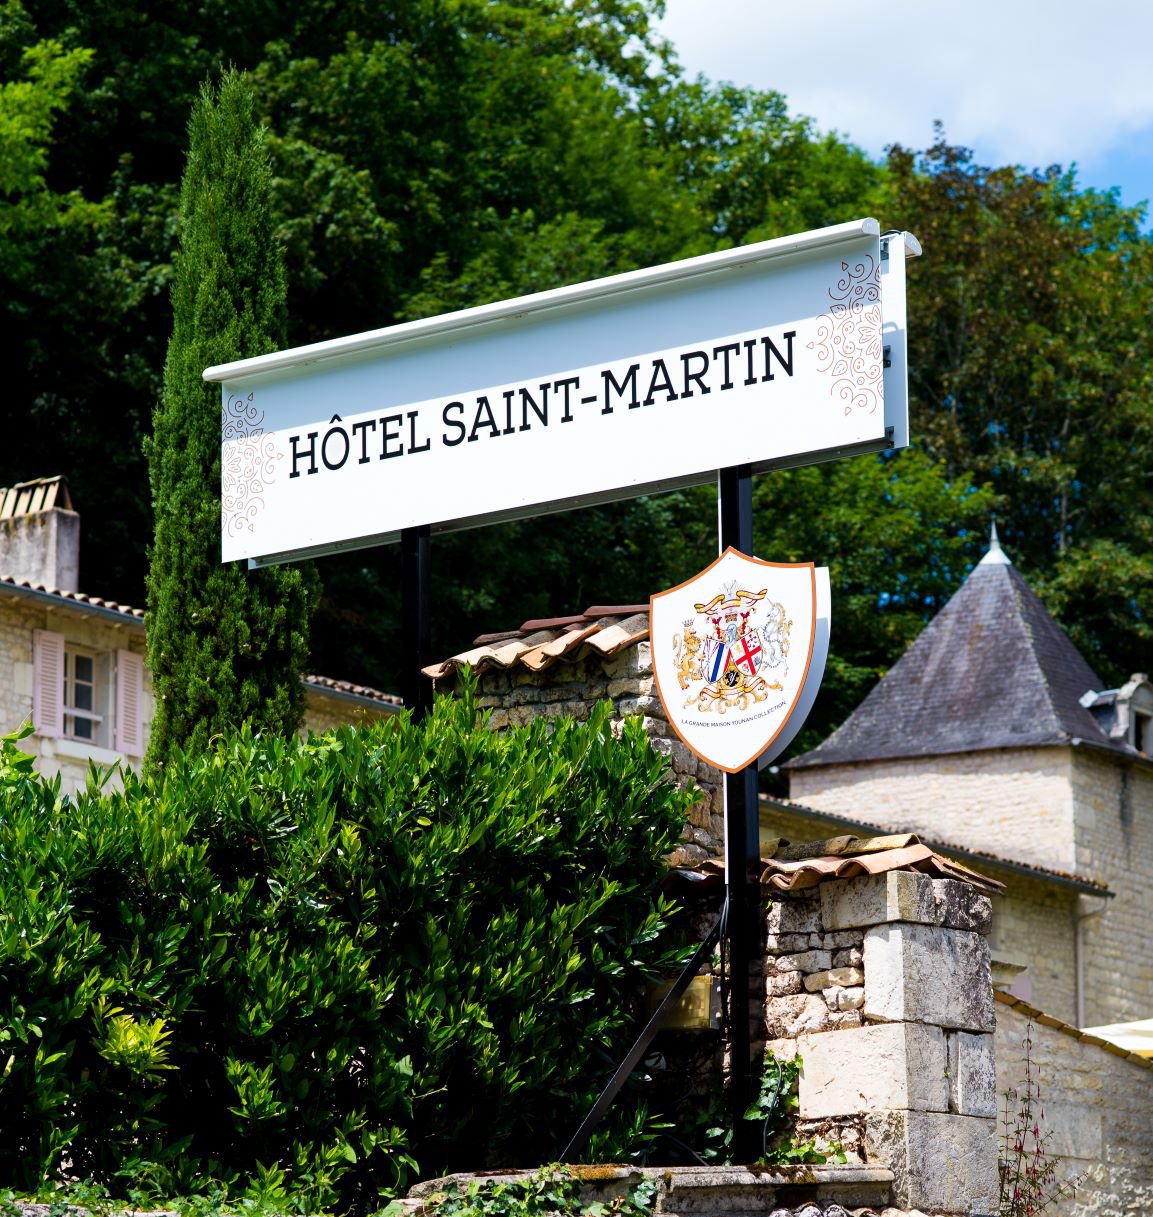 281/Hotel_Saint_Martin/Exterieur/romain-faucher_RFA9483_resize_1.jpg